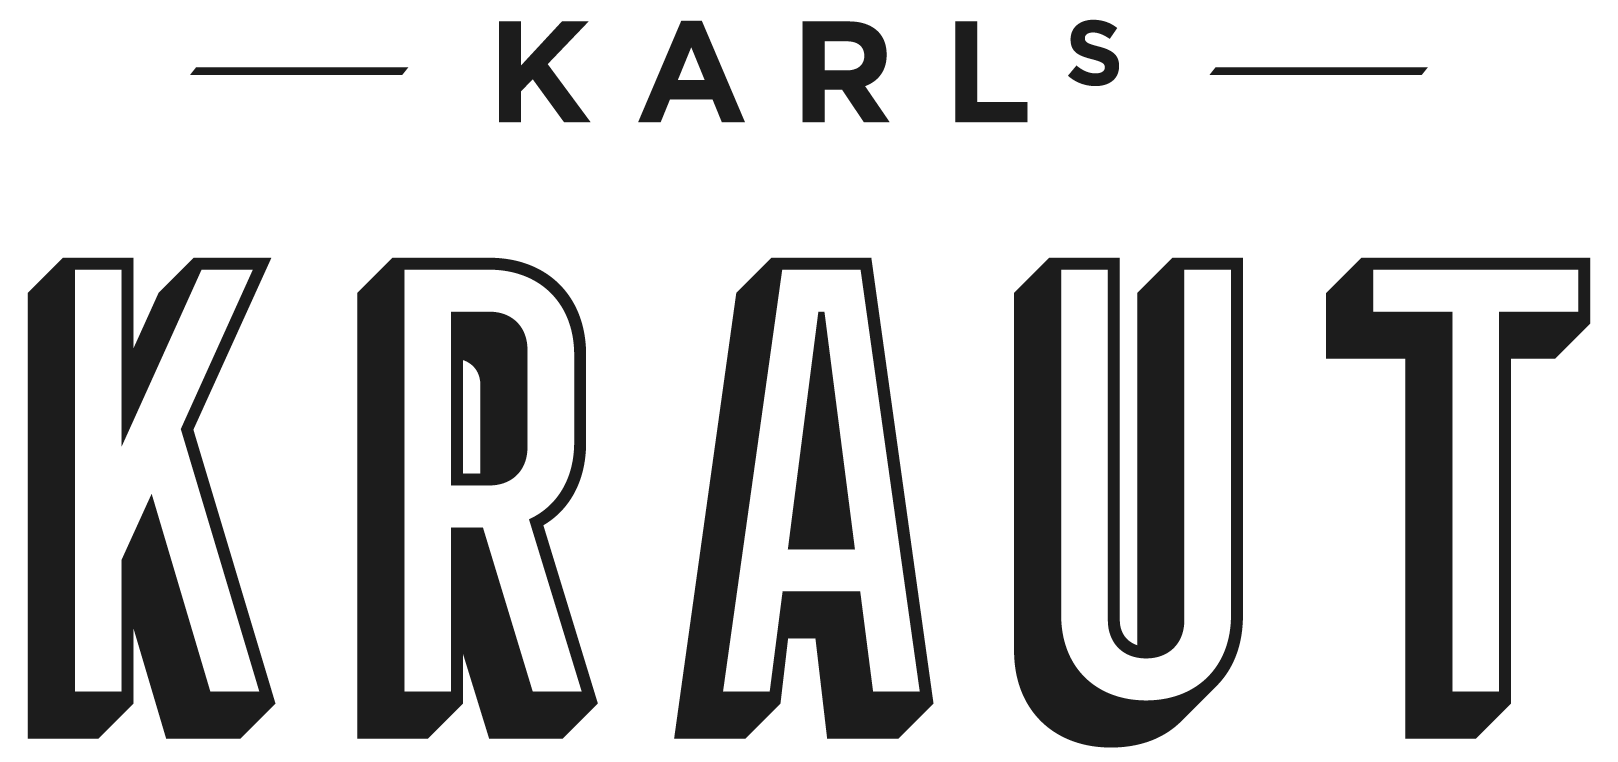 Karls Kraut